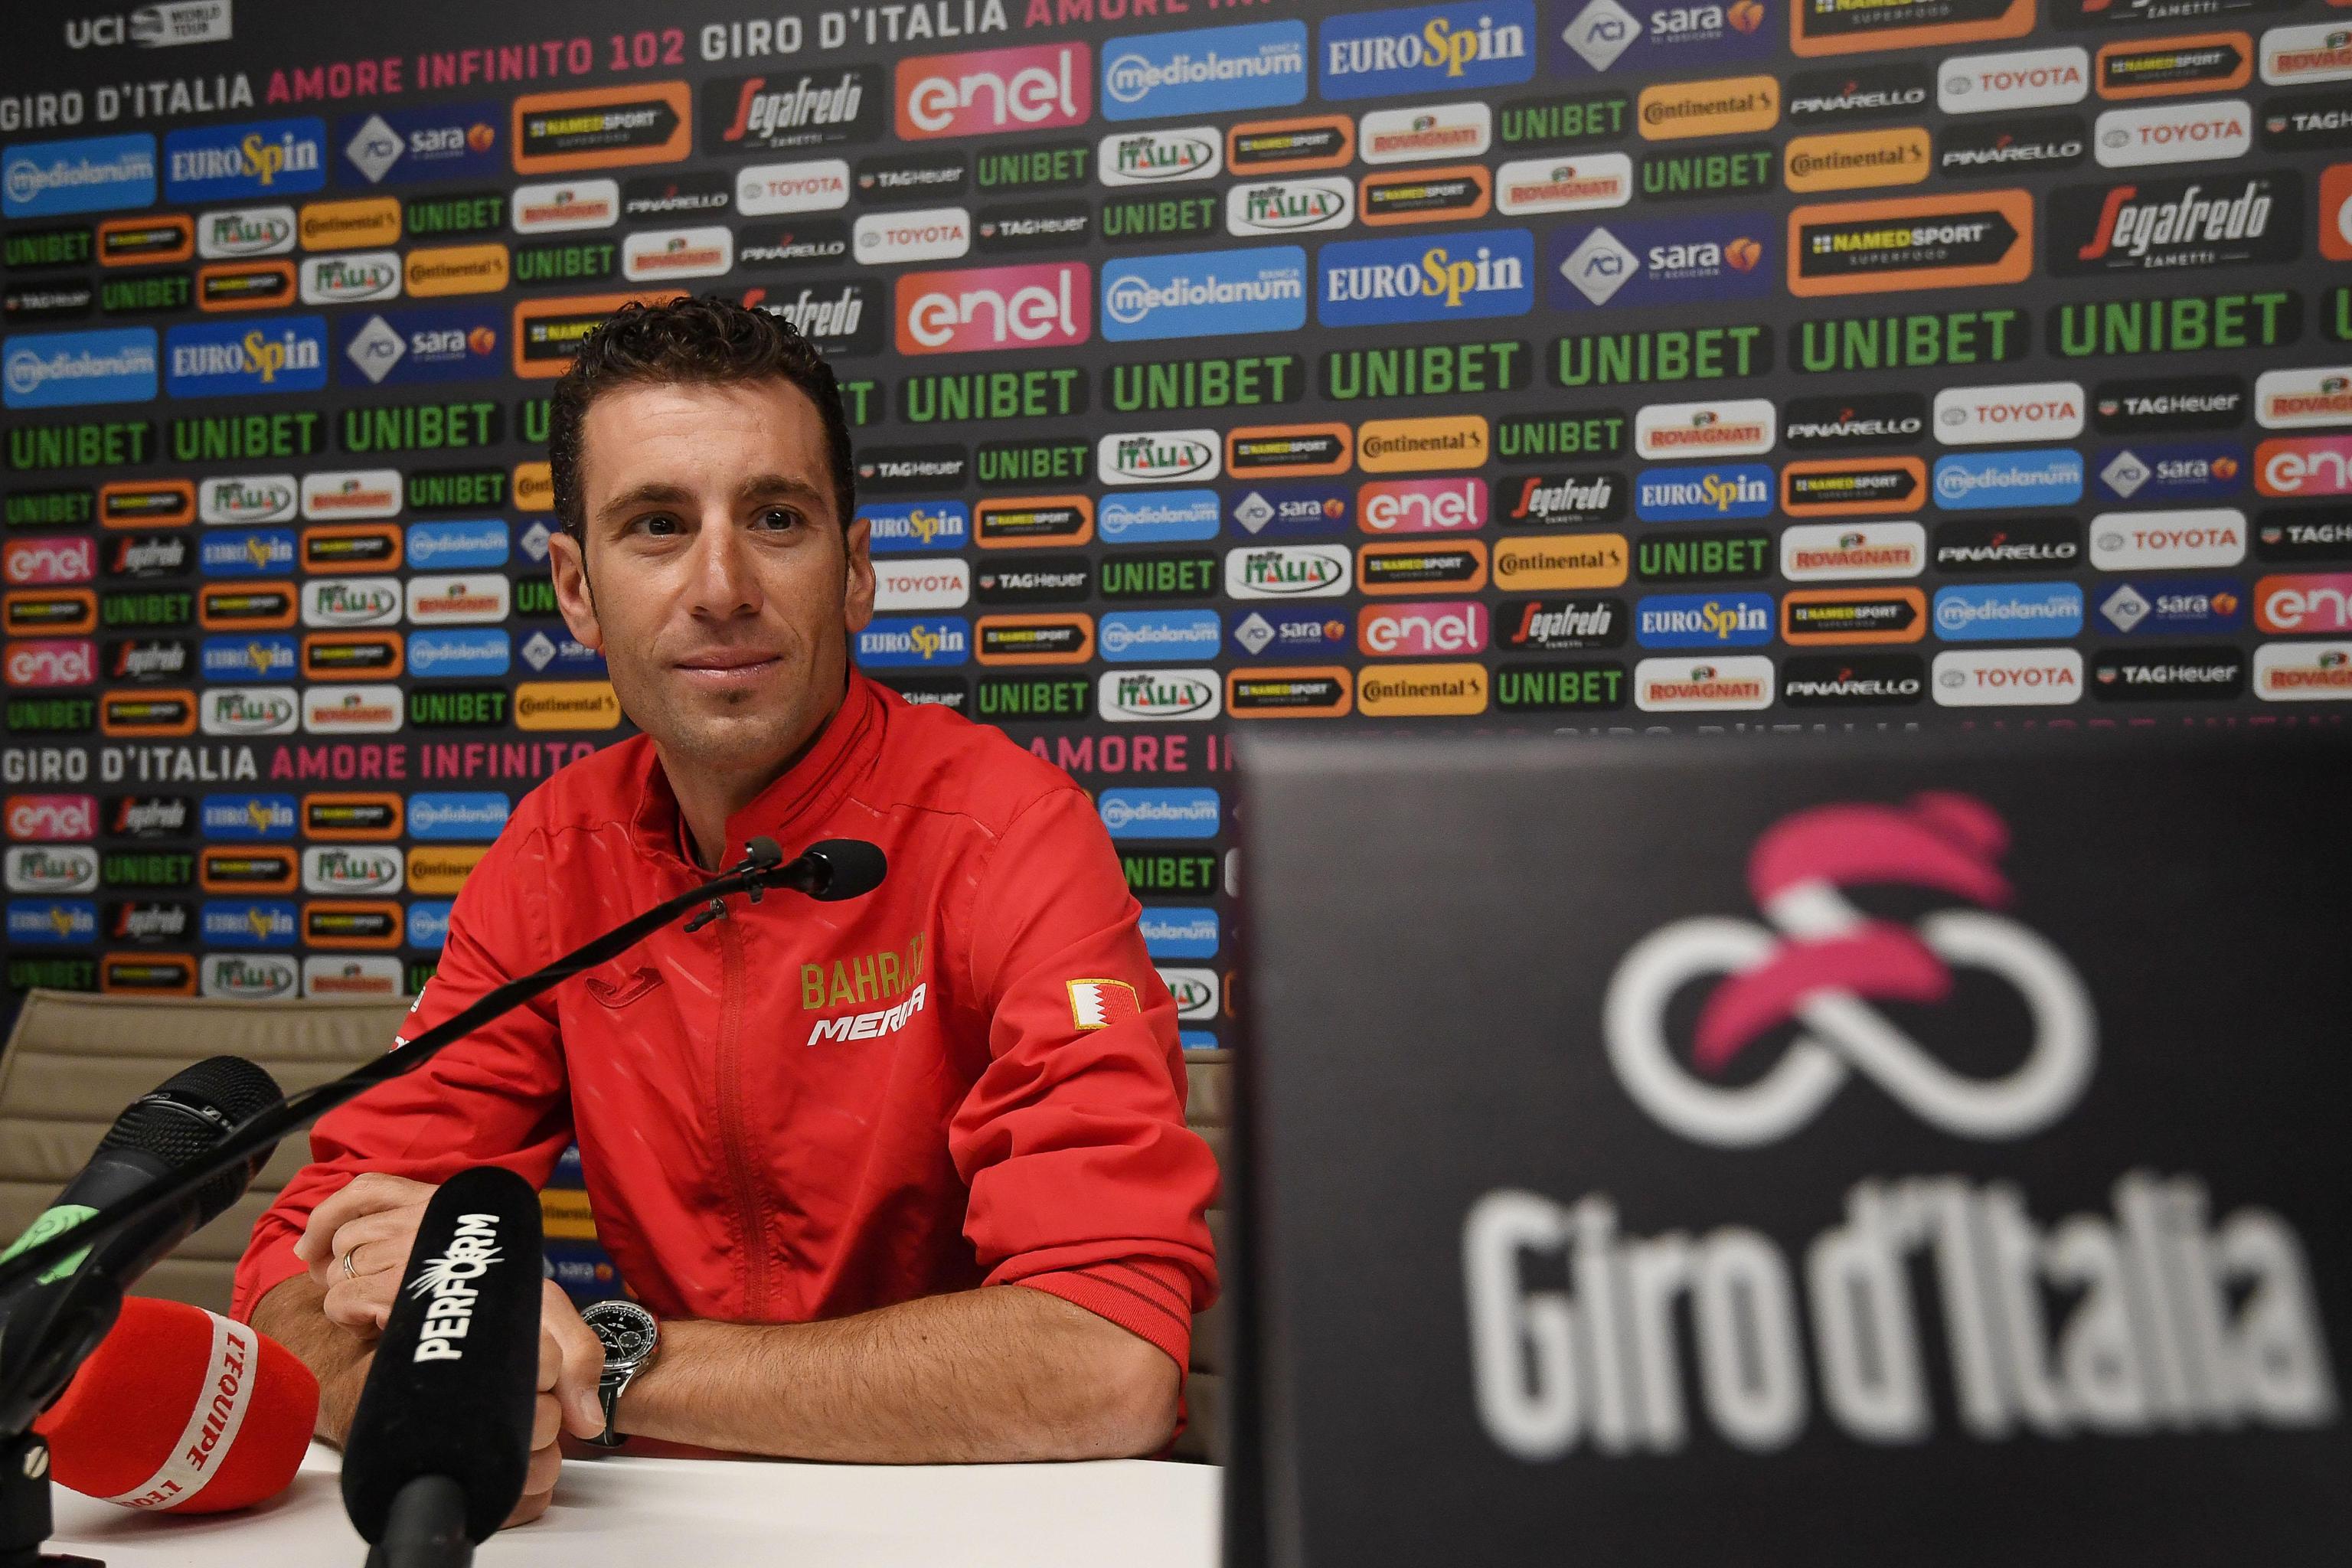 Italian rider Vincenzo Nibali of Bahrain - Merida, during a press conference on the Giro d'Italia 2019, Bologna, Italy 9 May 2019. The 102th edition of the Giro d'Italia will start in Bologna on 11 May 2019.
ANSA/ALESSANDRO DI MEO